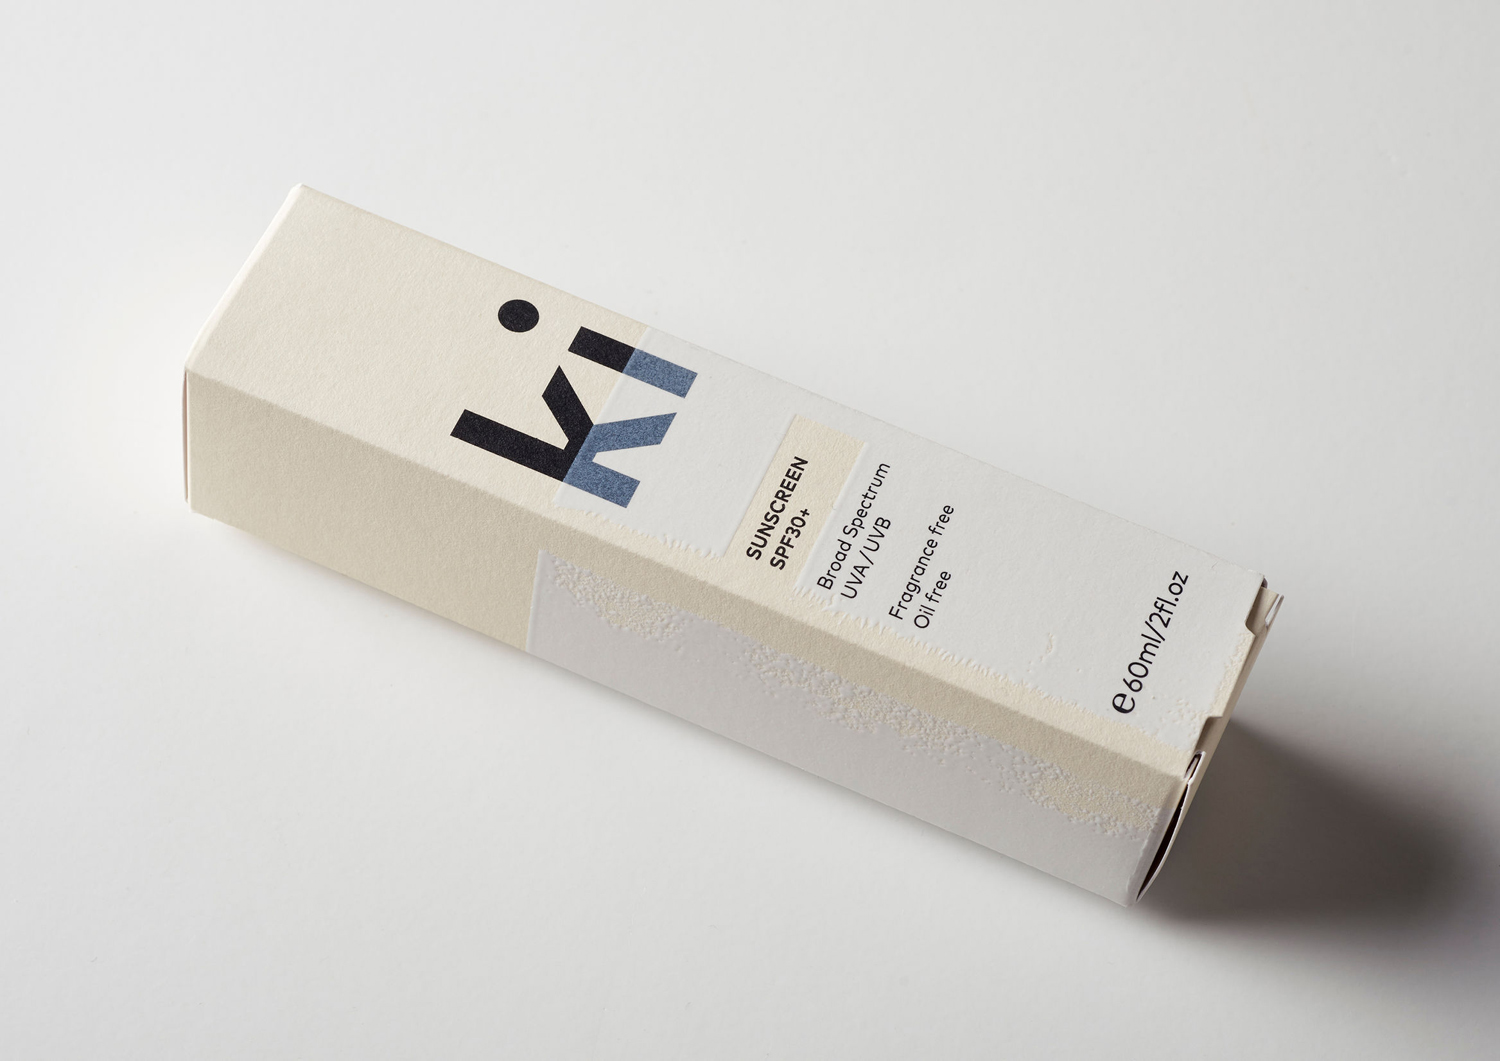 Packaging design by Aukland-based studio Akin for New Zealand sunscreen brand Ki